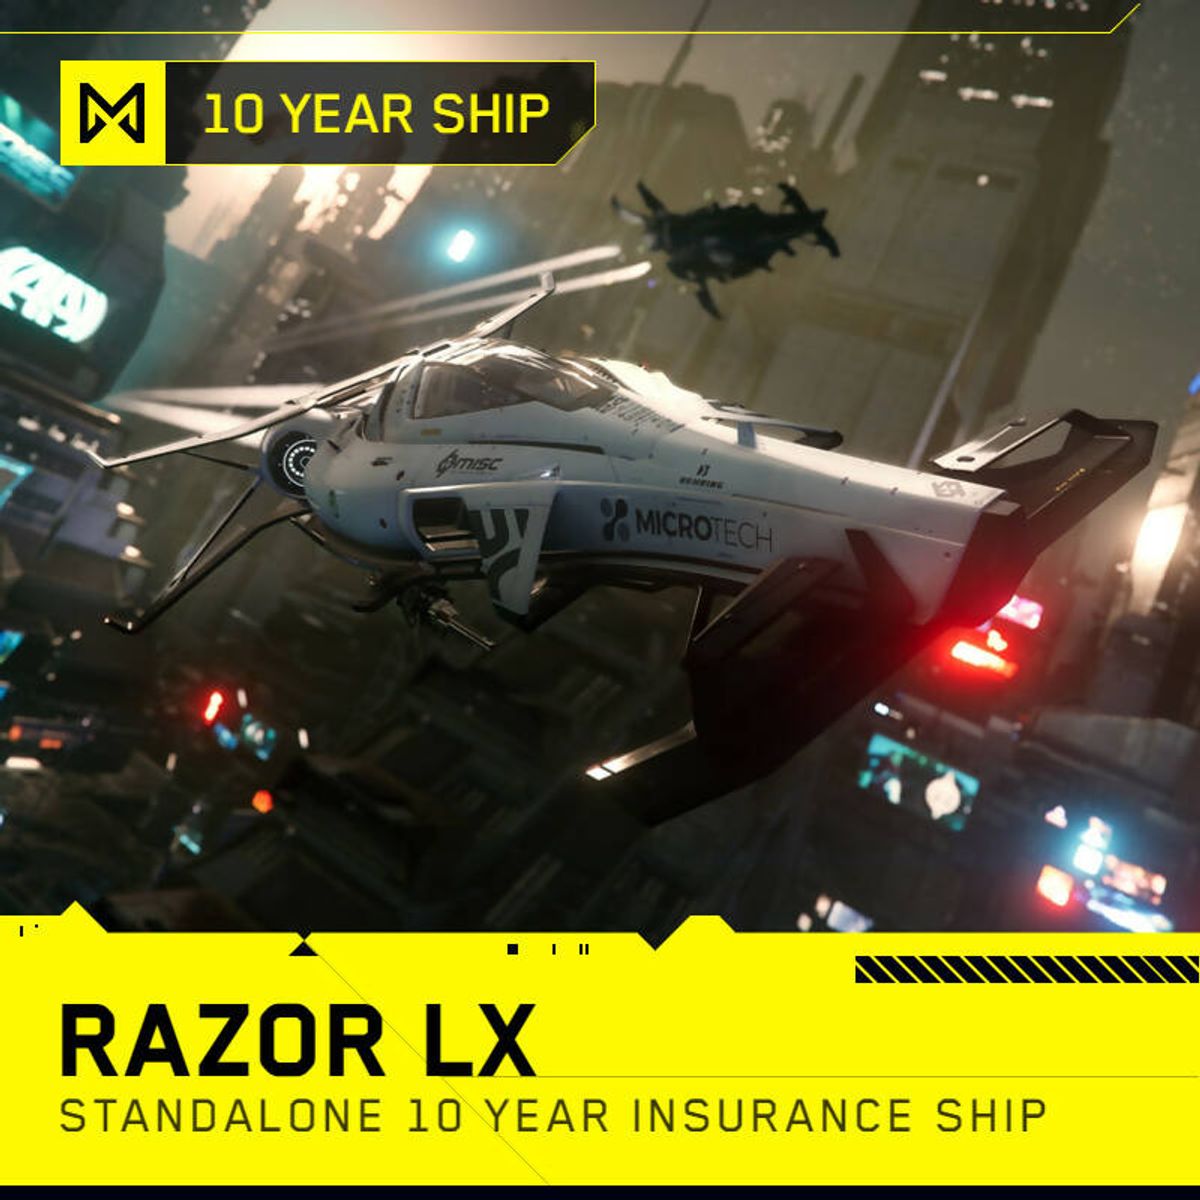 Razor LX - 10 Year